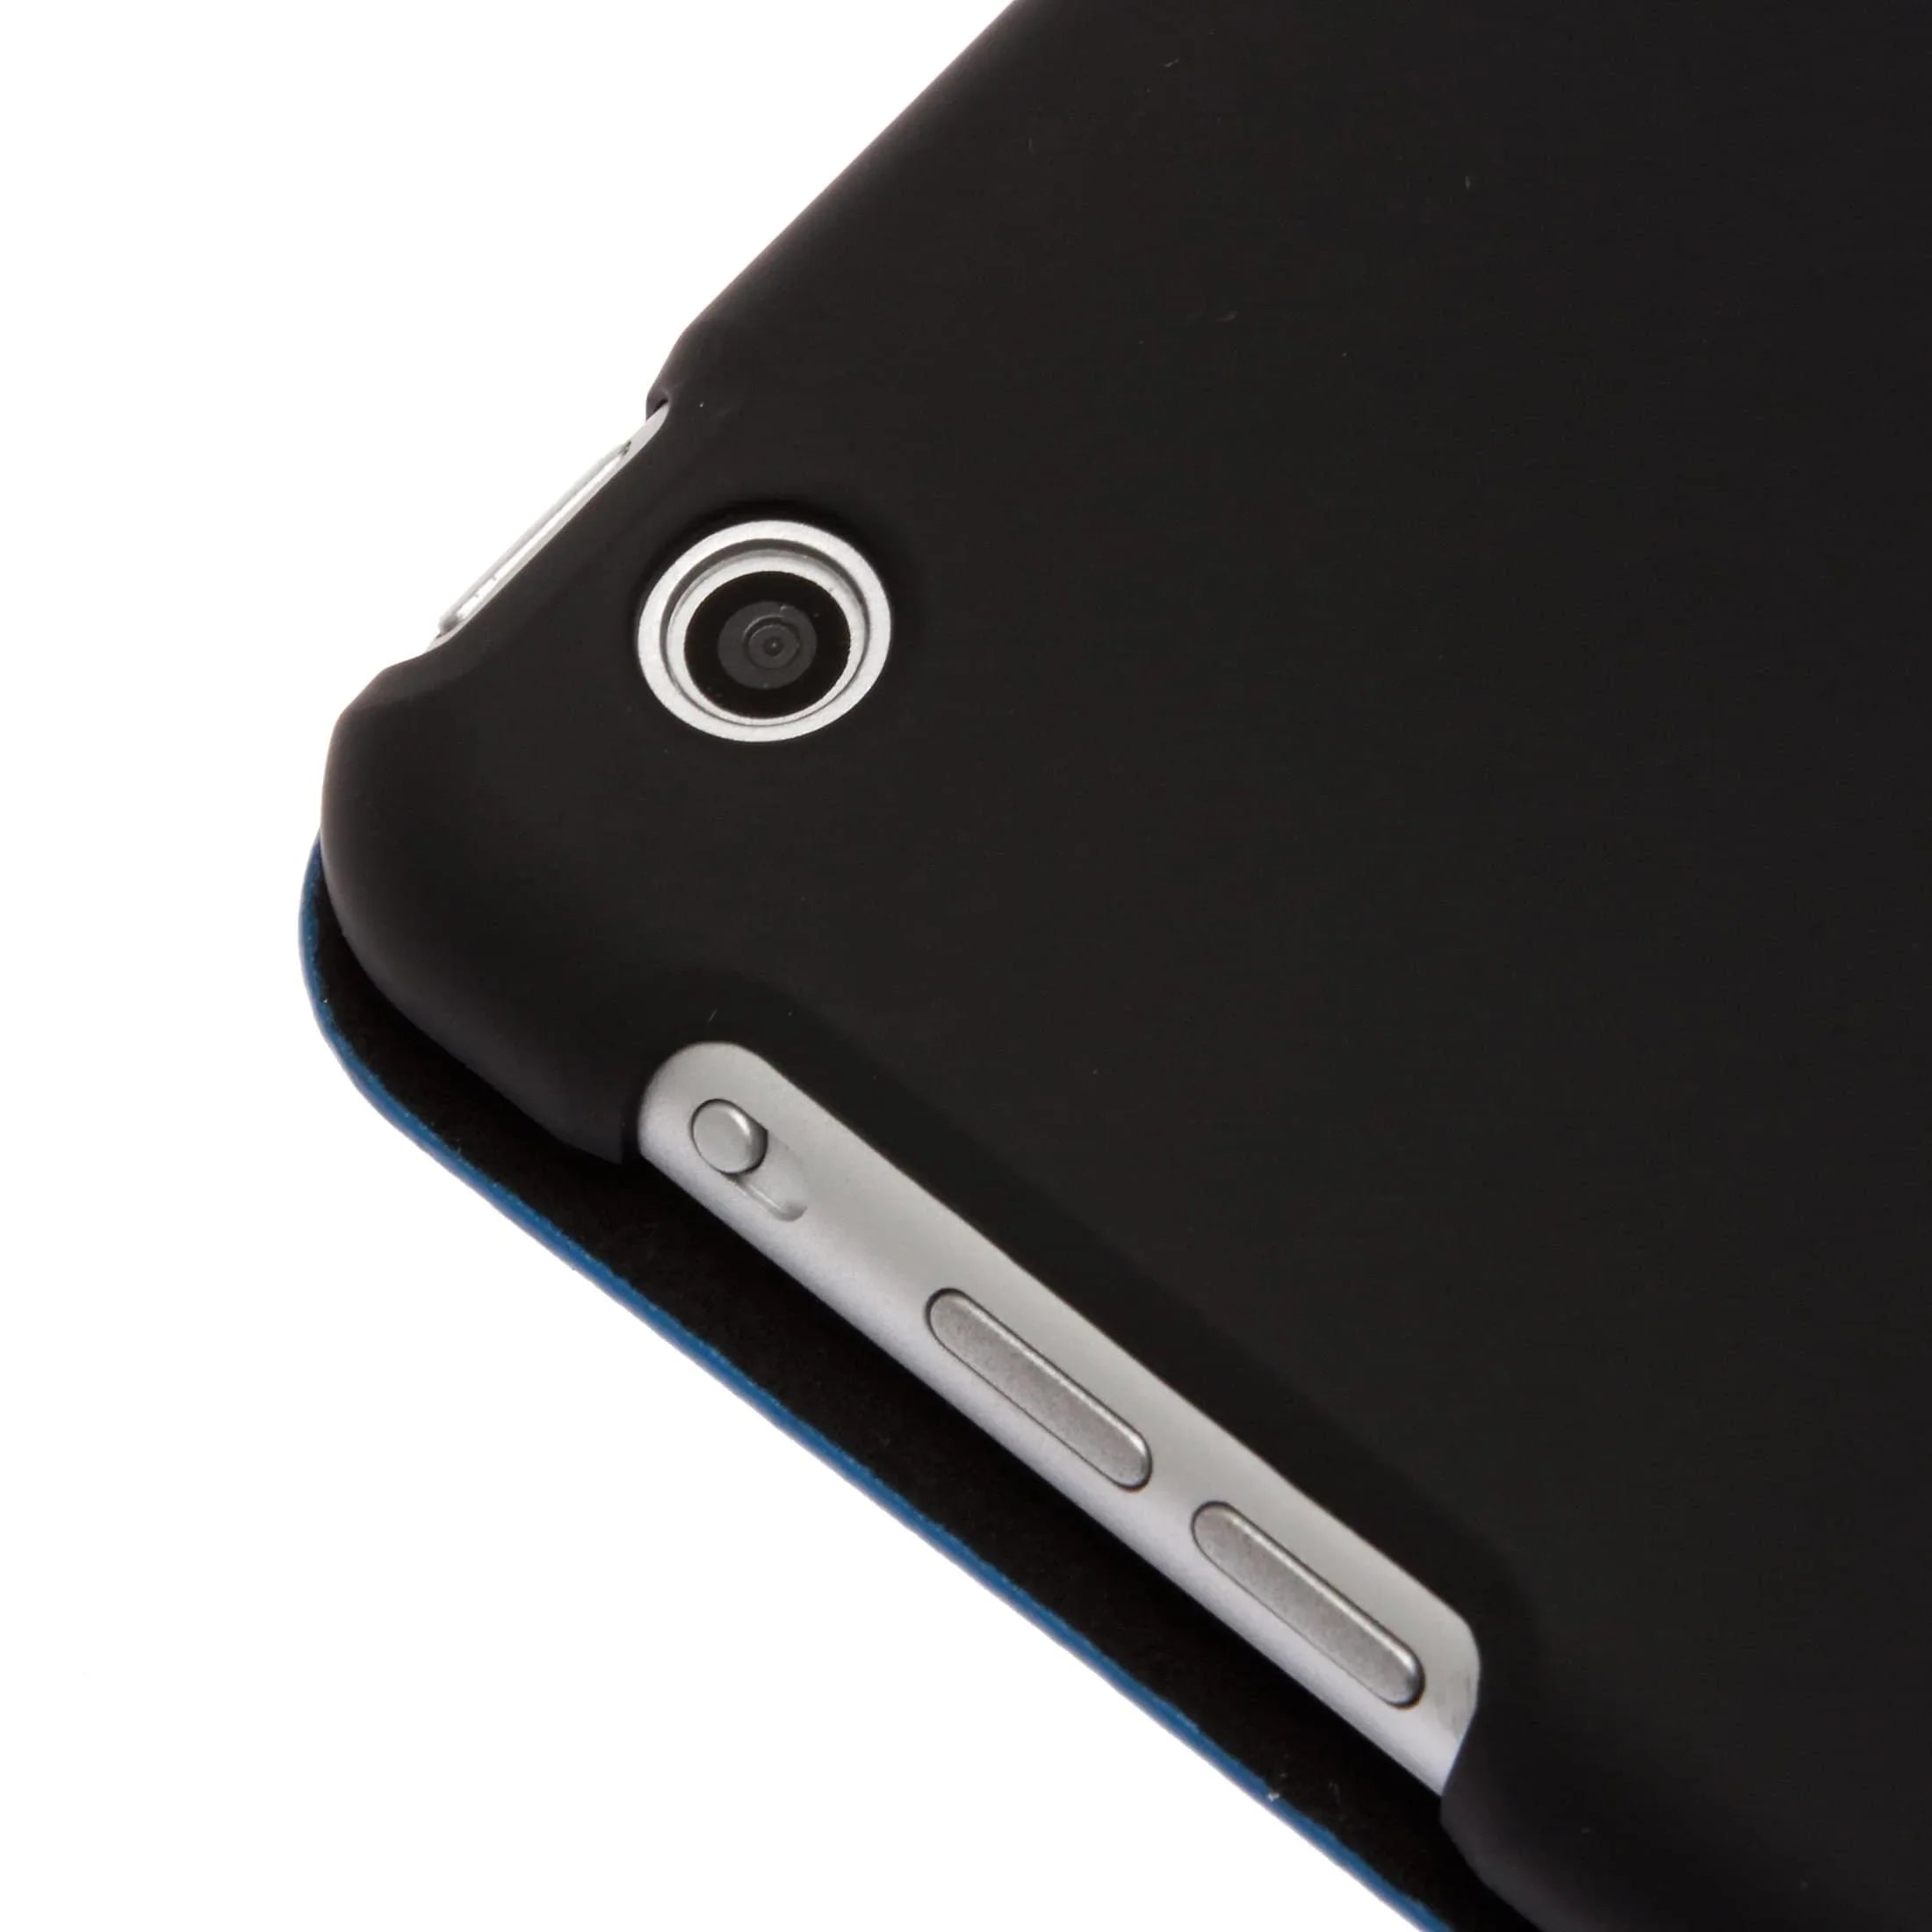 Tumi Accessories Lederschutzhülle für iPad Air 24 cm - fuchsia